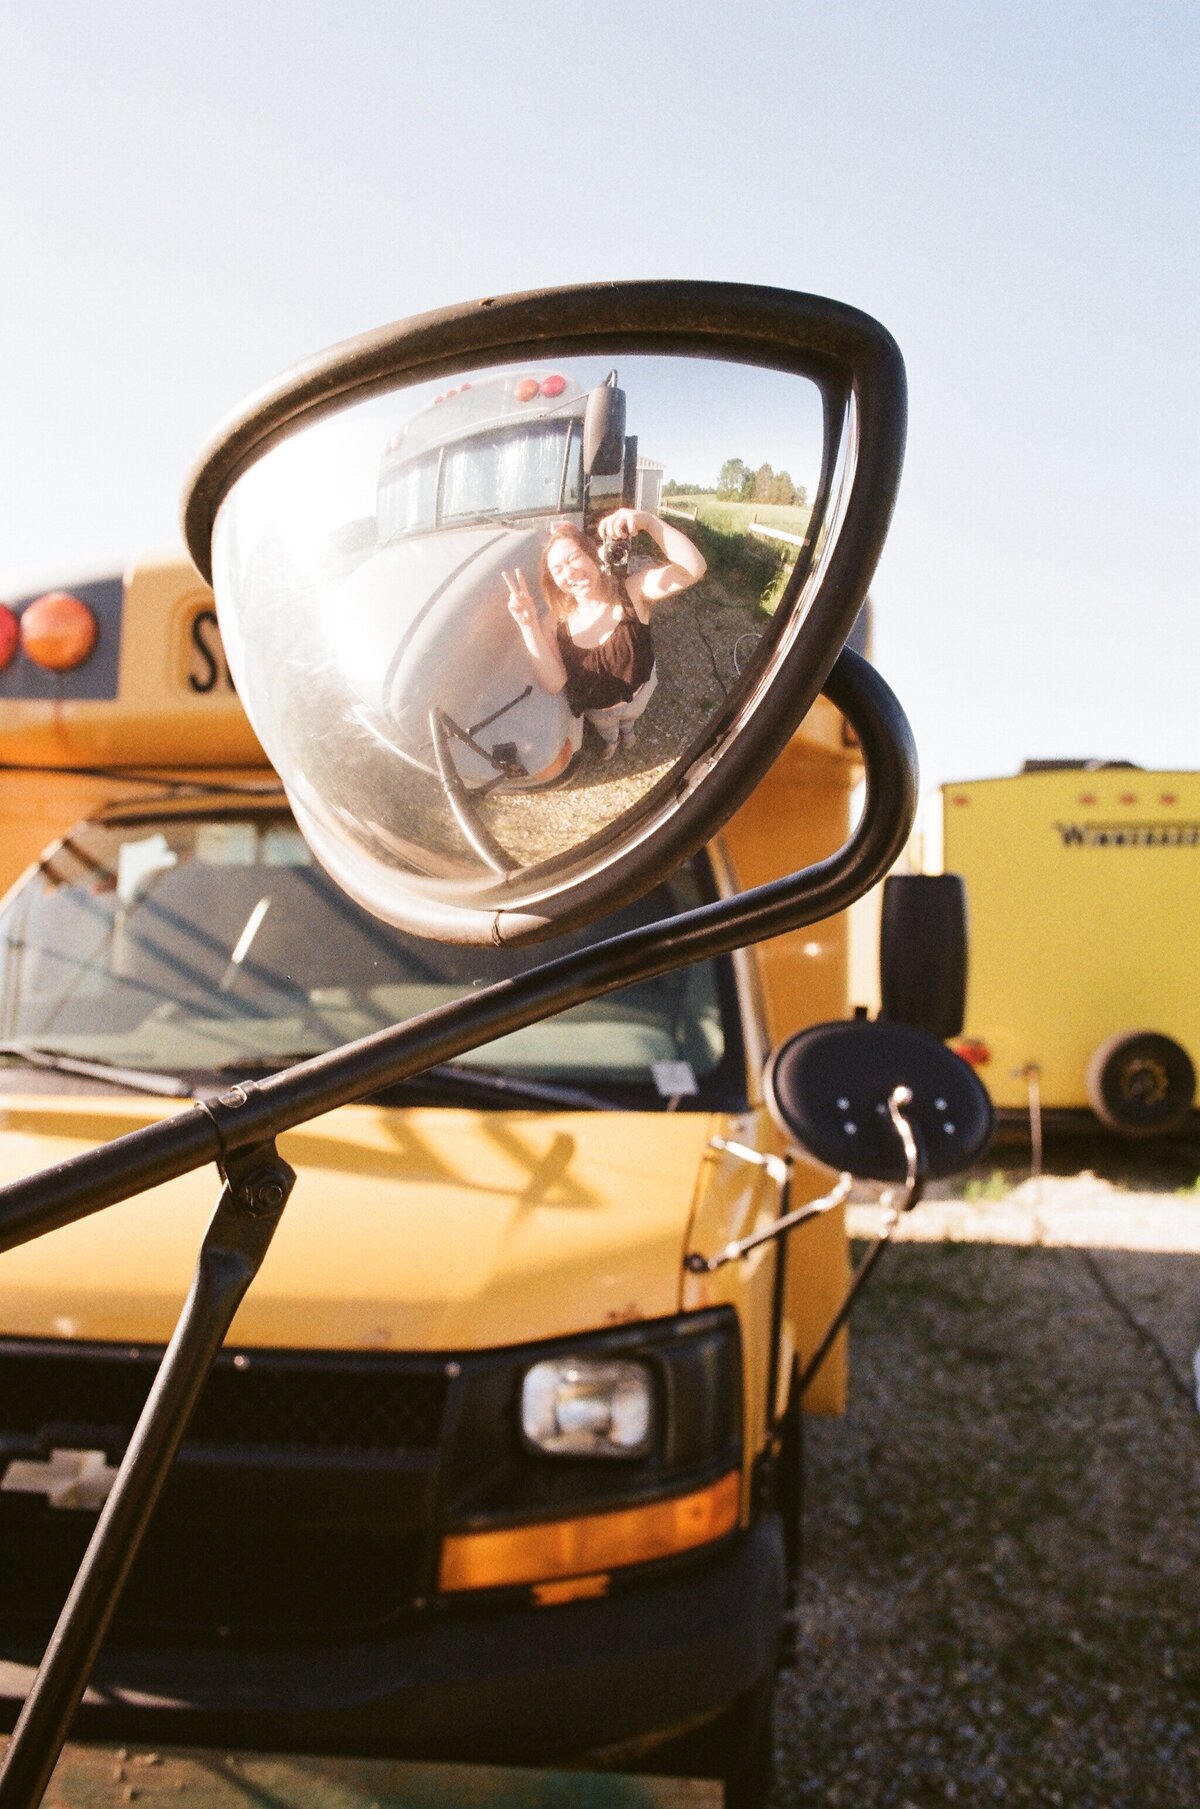 mirror selfie of brianna kirk in the mirror of the school bus